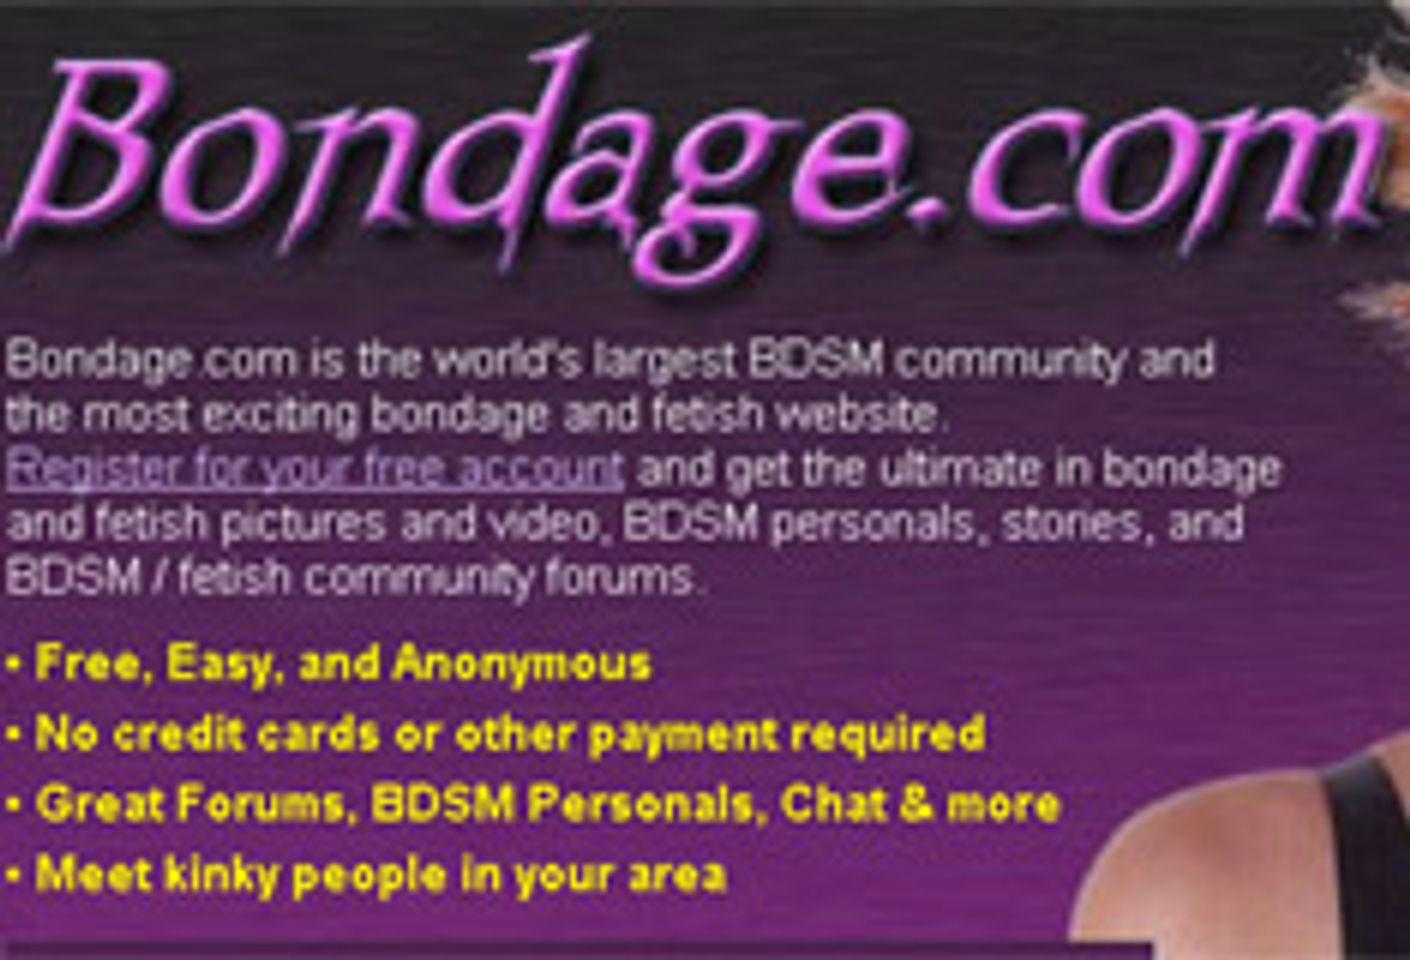 Bondage.com 2257 Compliance Integrated to my2257 Database